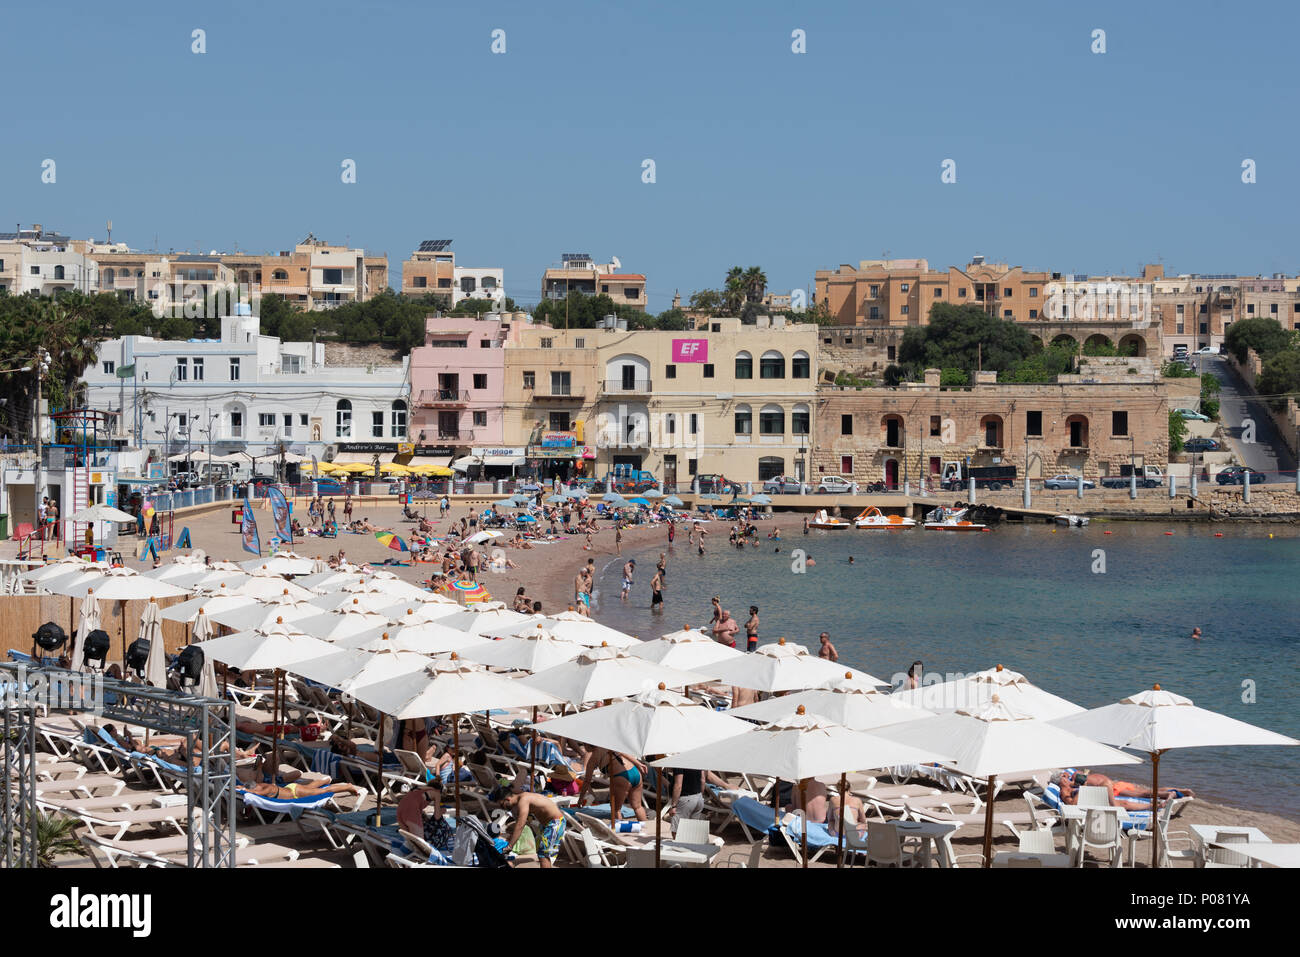 Beach in Malta sunny people swimming and sunbathing Stock Photo